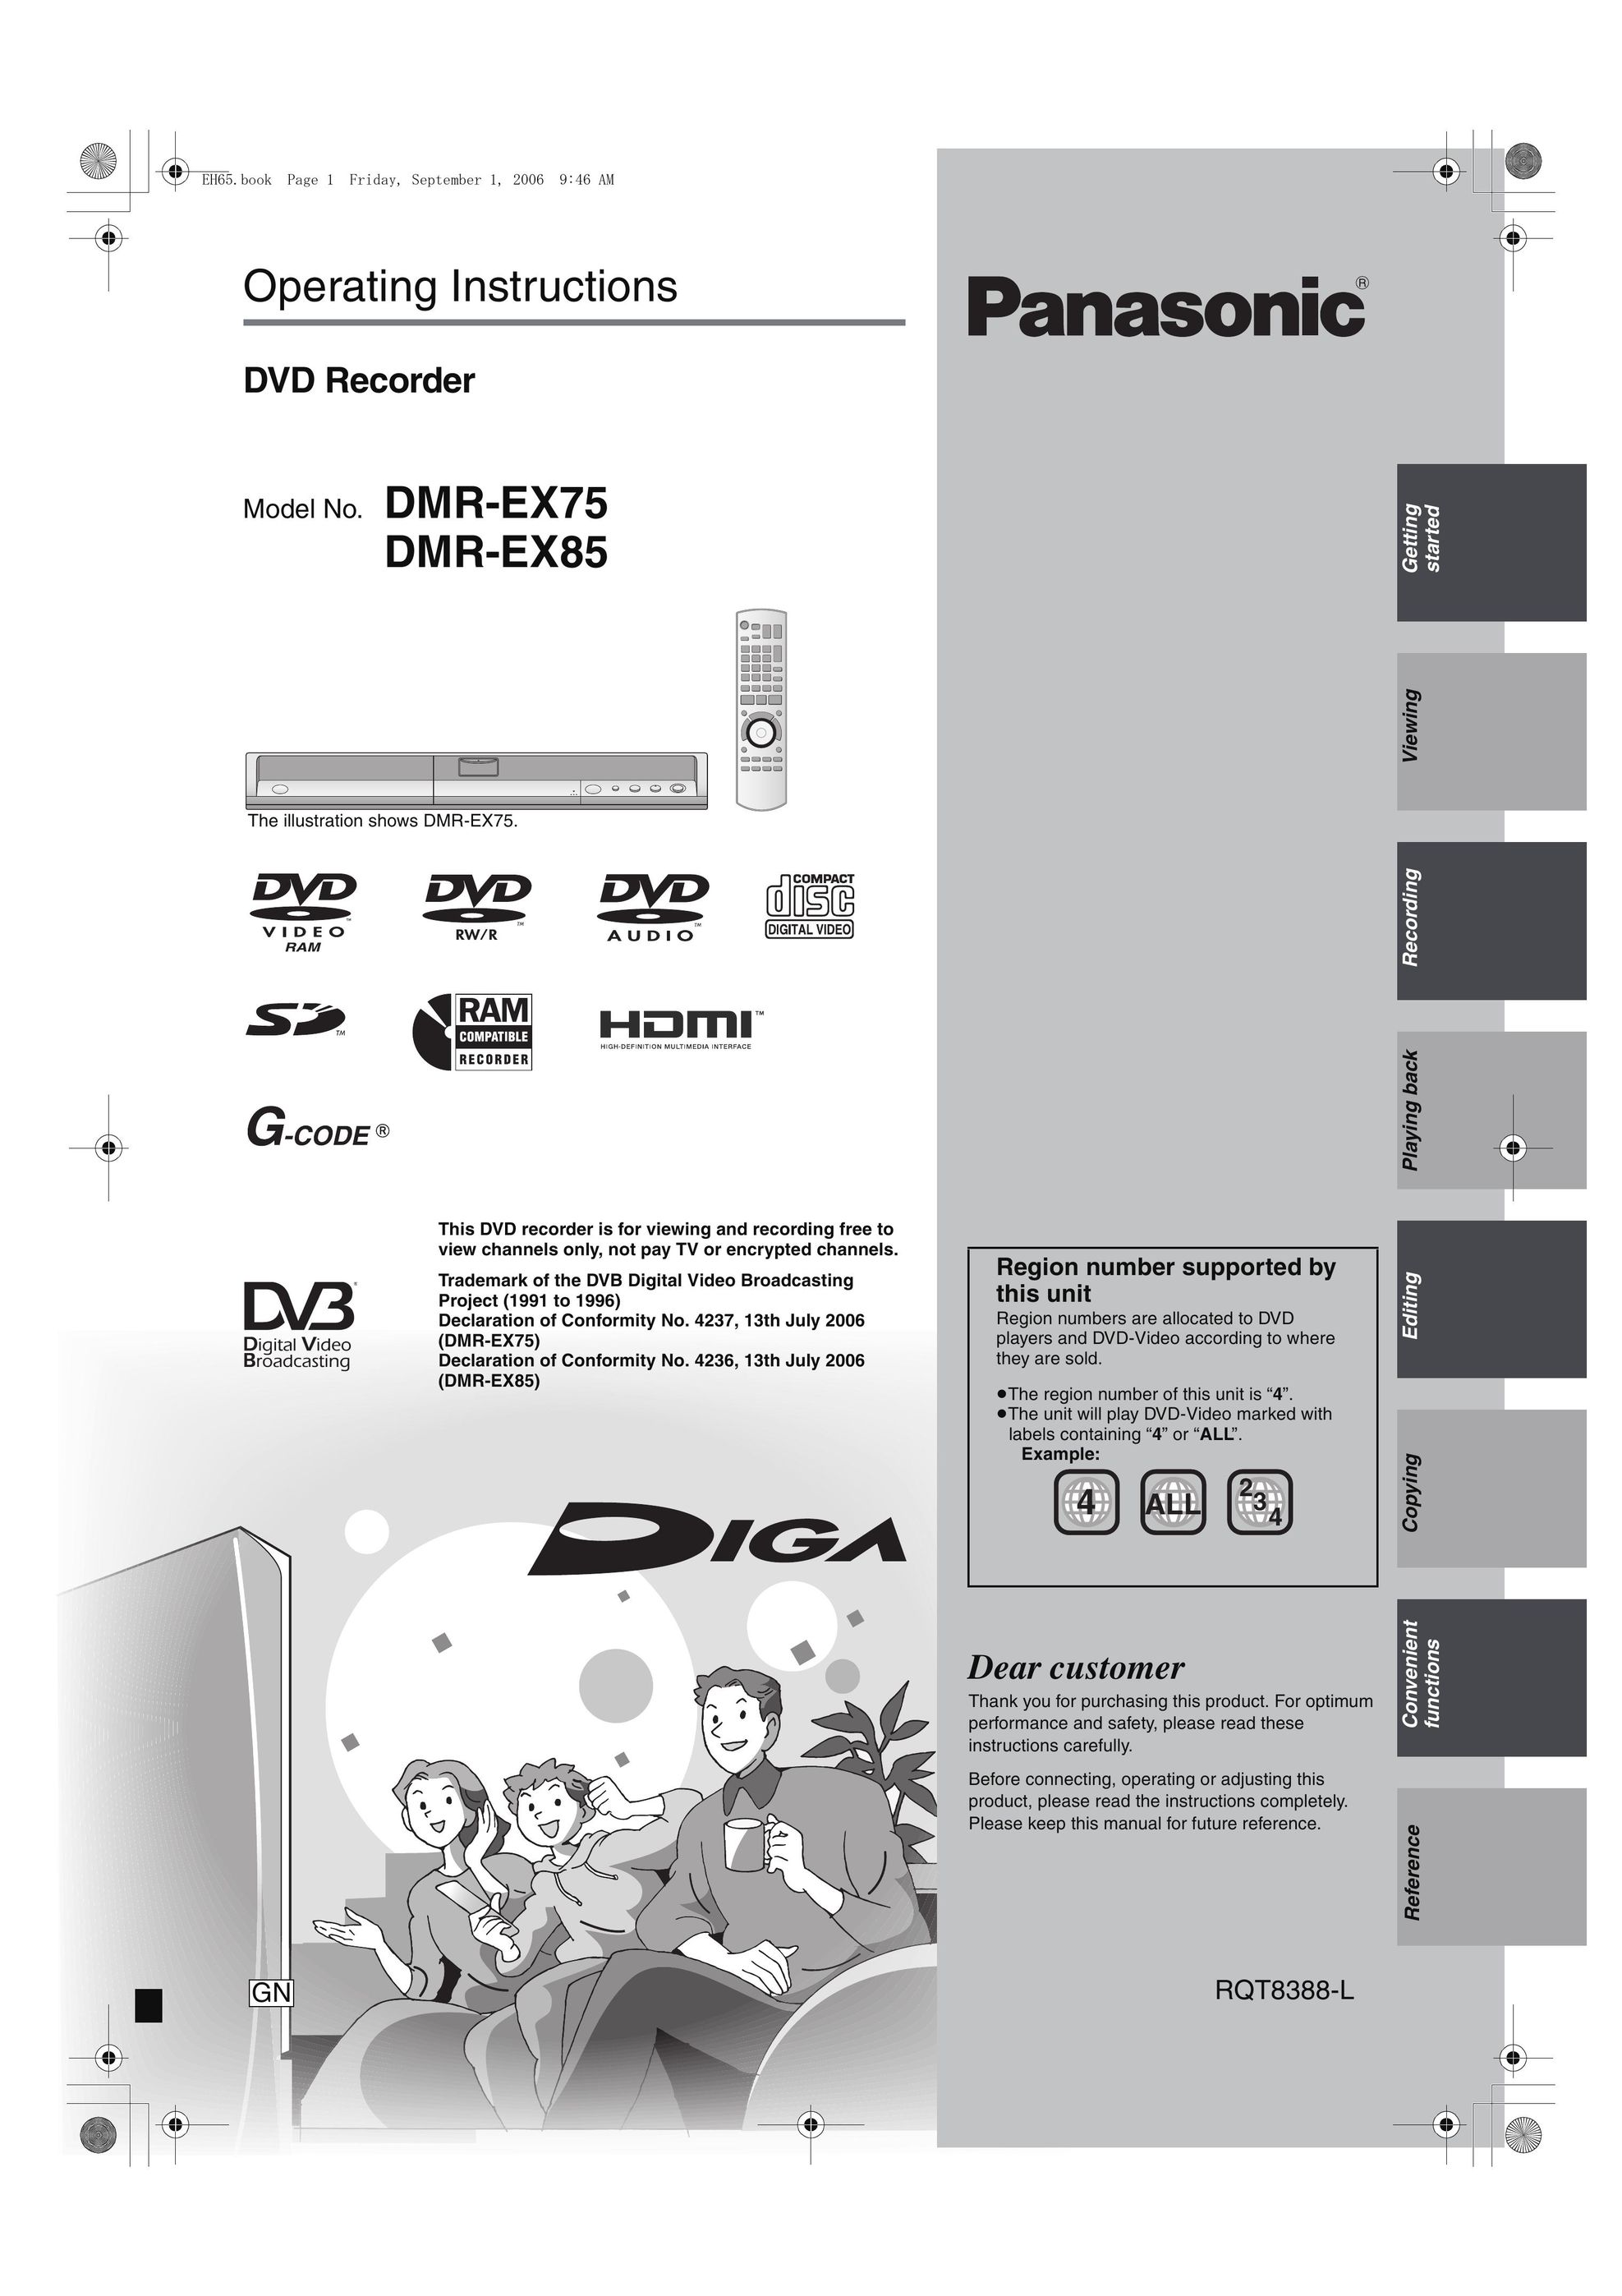 Panasonic DMR-EX85 DVR User Manual